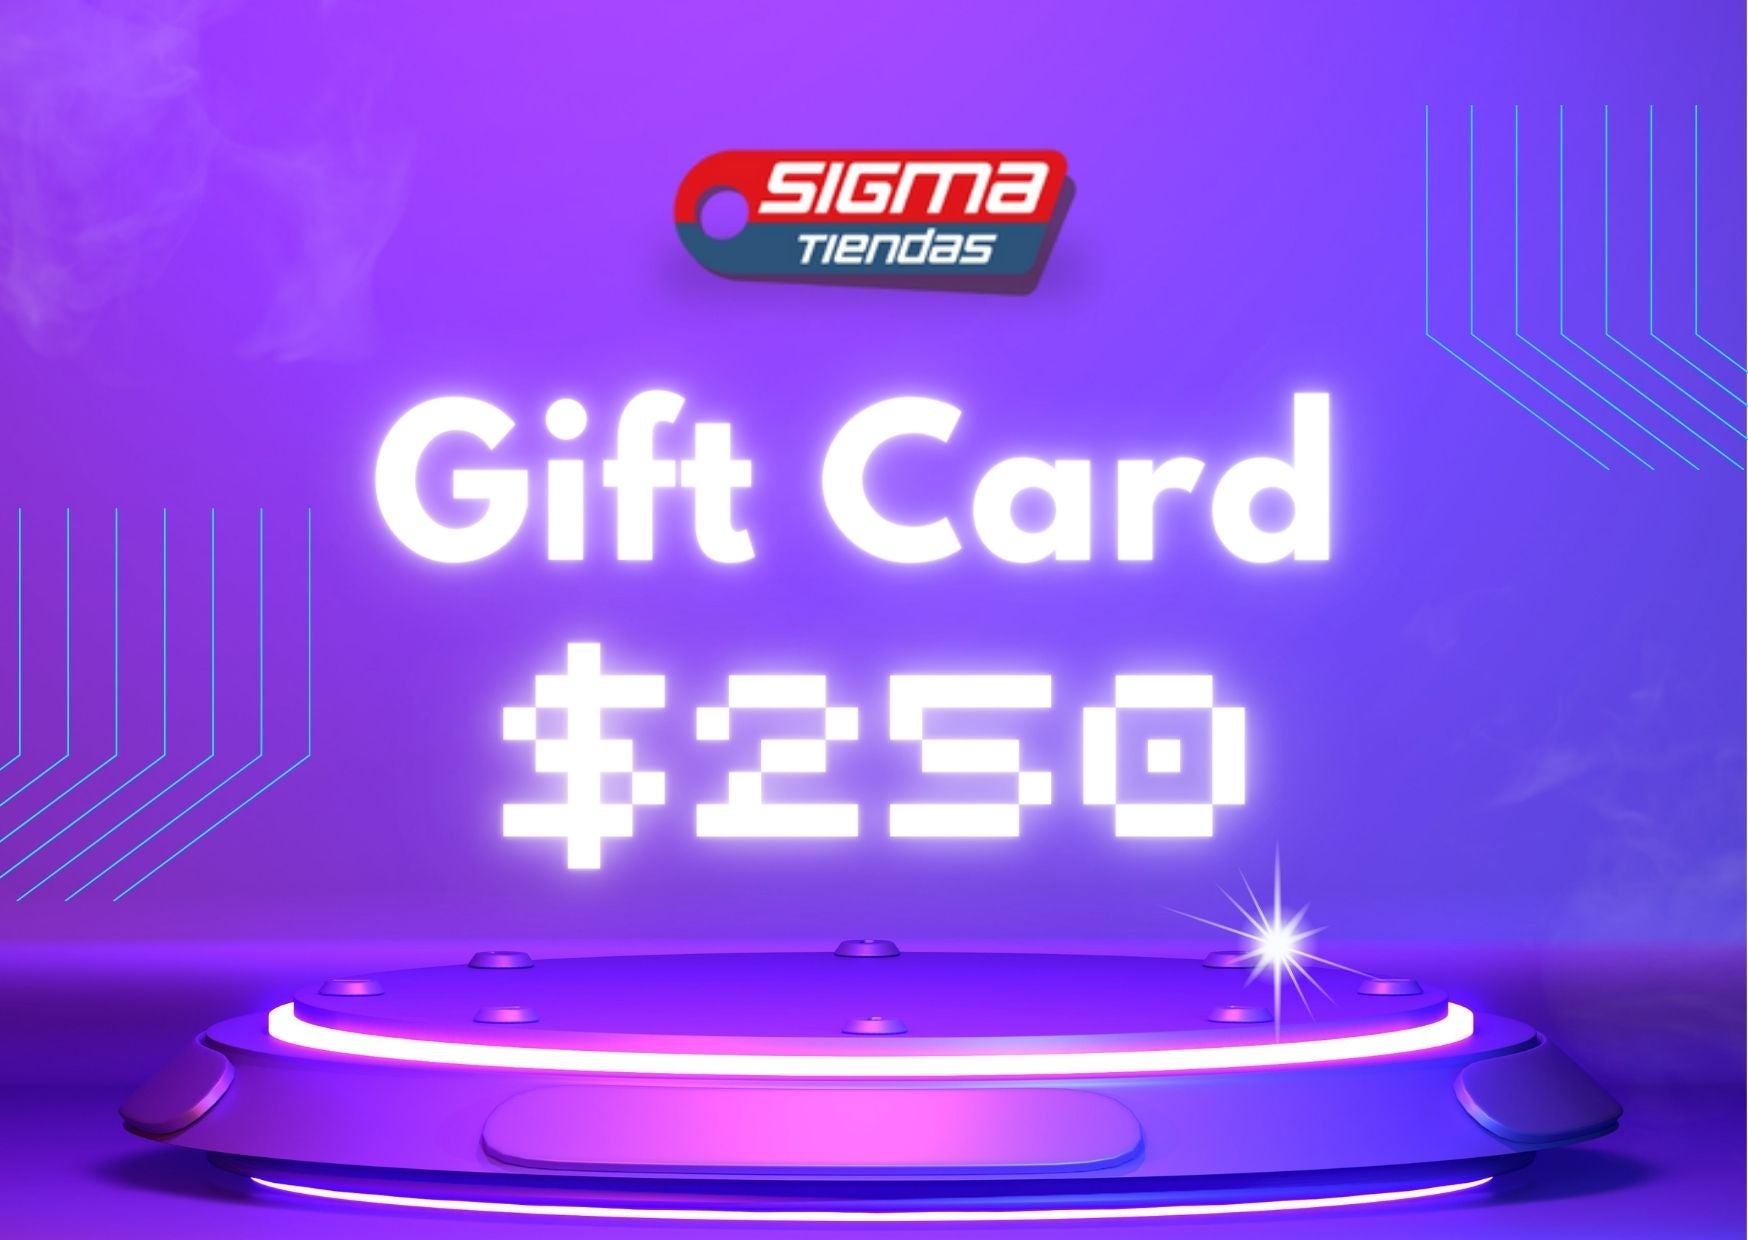 Gift Card Sigma $250